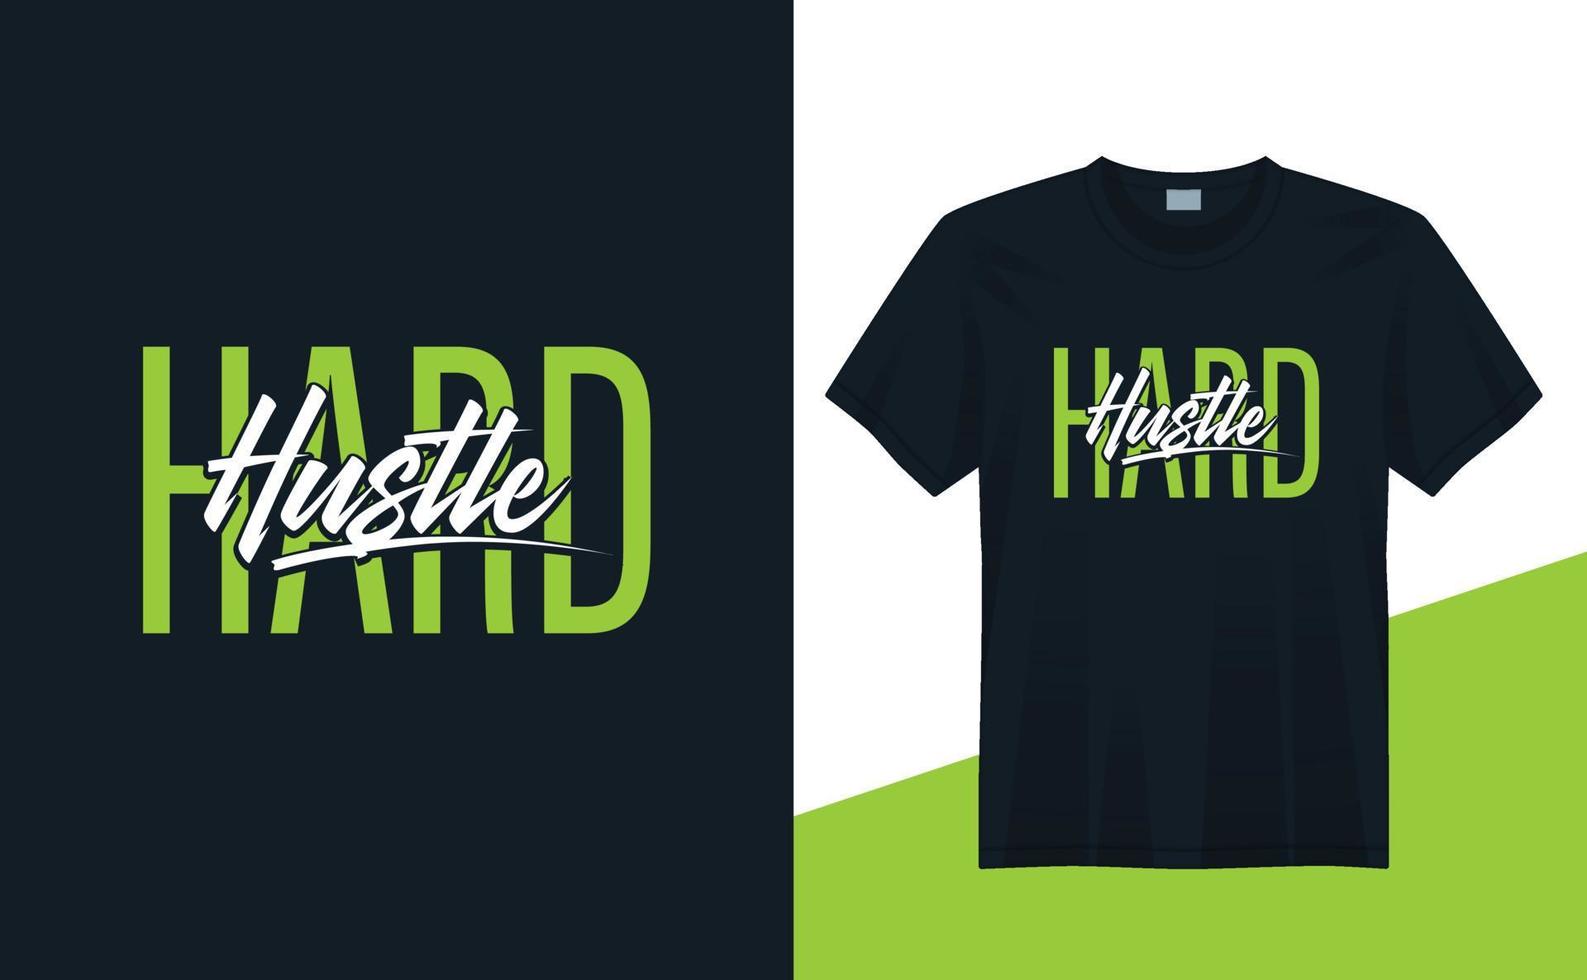 Hustle Hard - vintage grunge tshirt design for tshirt printing, clothing fashion, Poster, Wall art. Tiger pattern vector illustration art for tshirt.